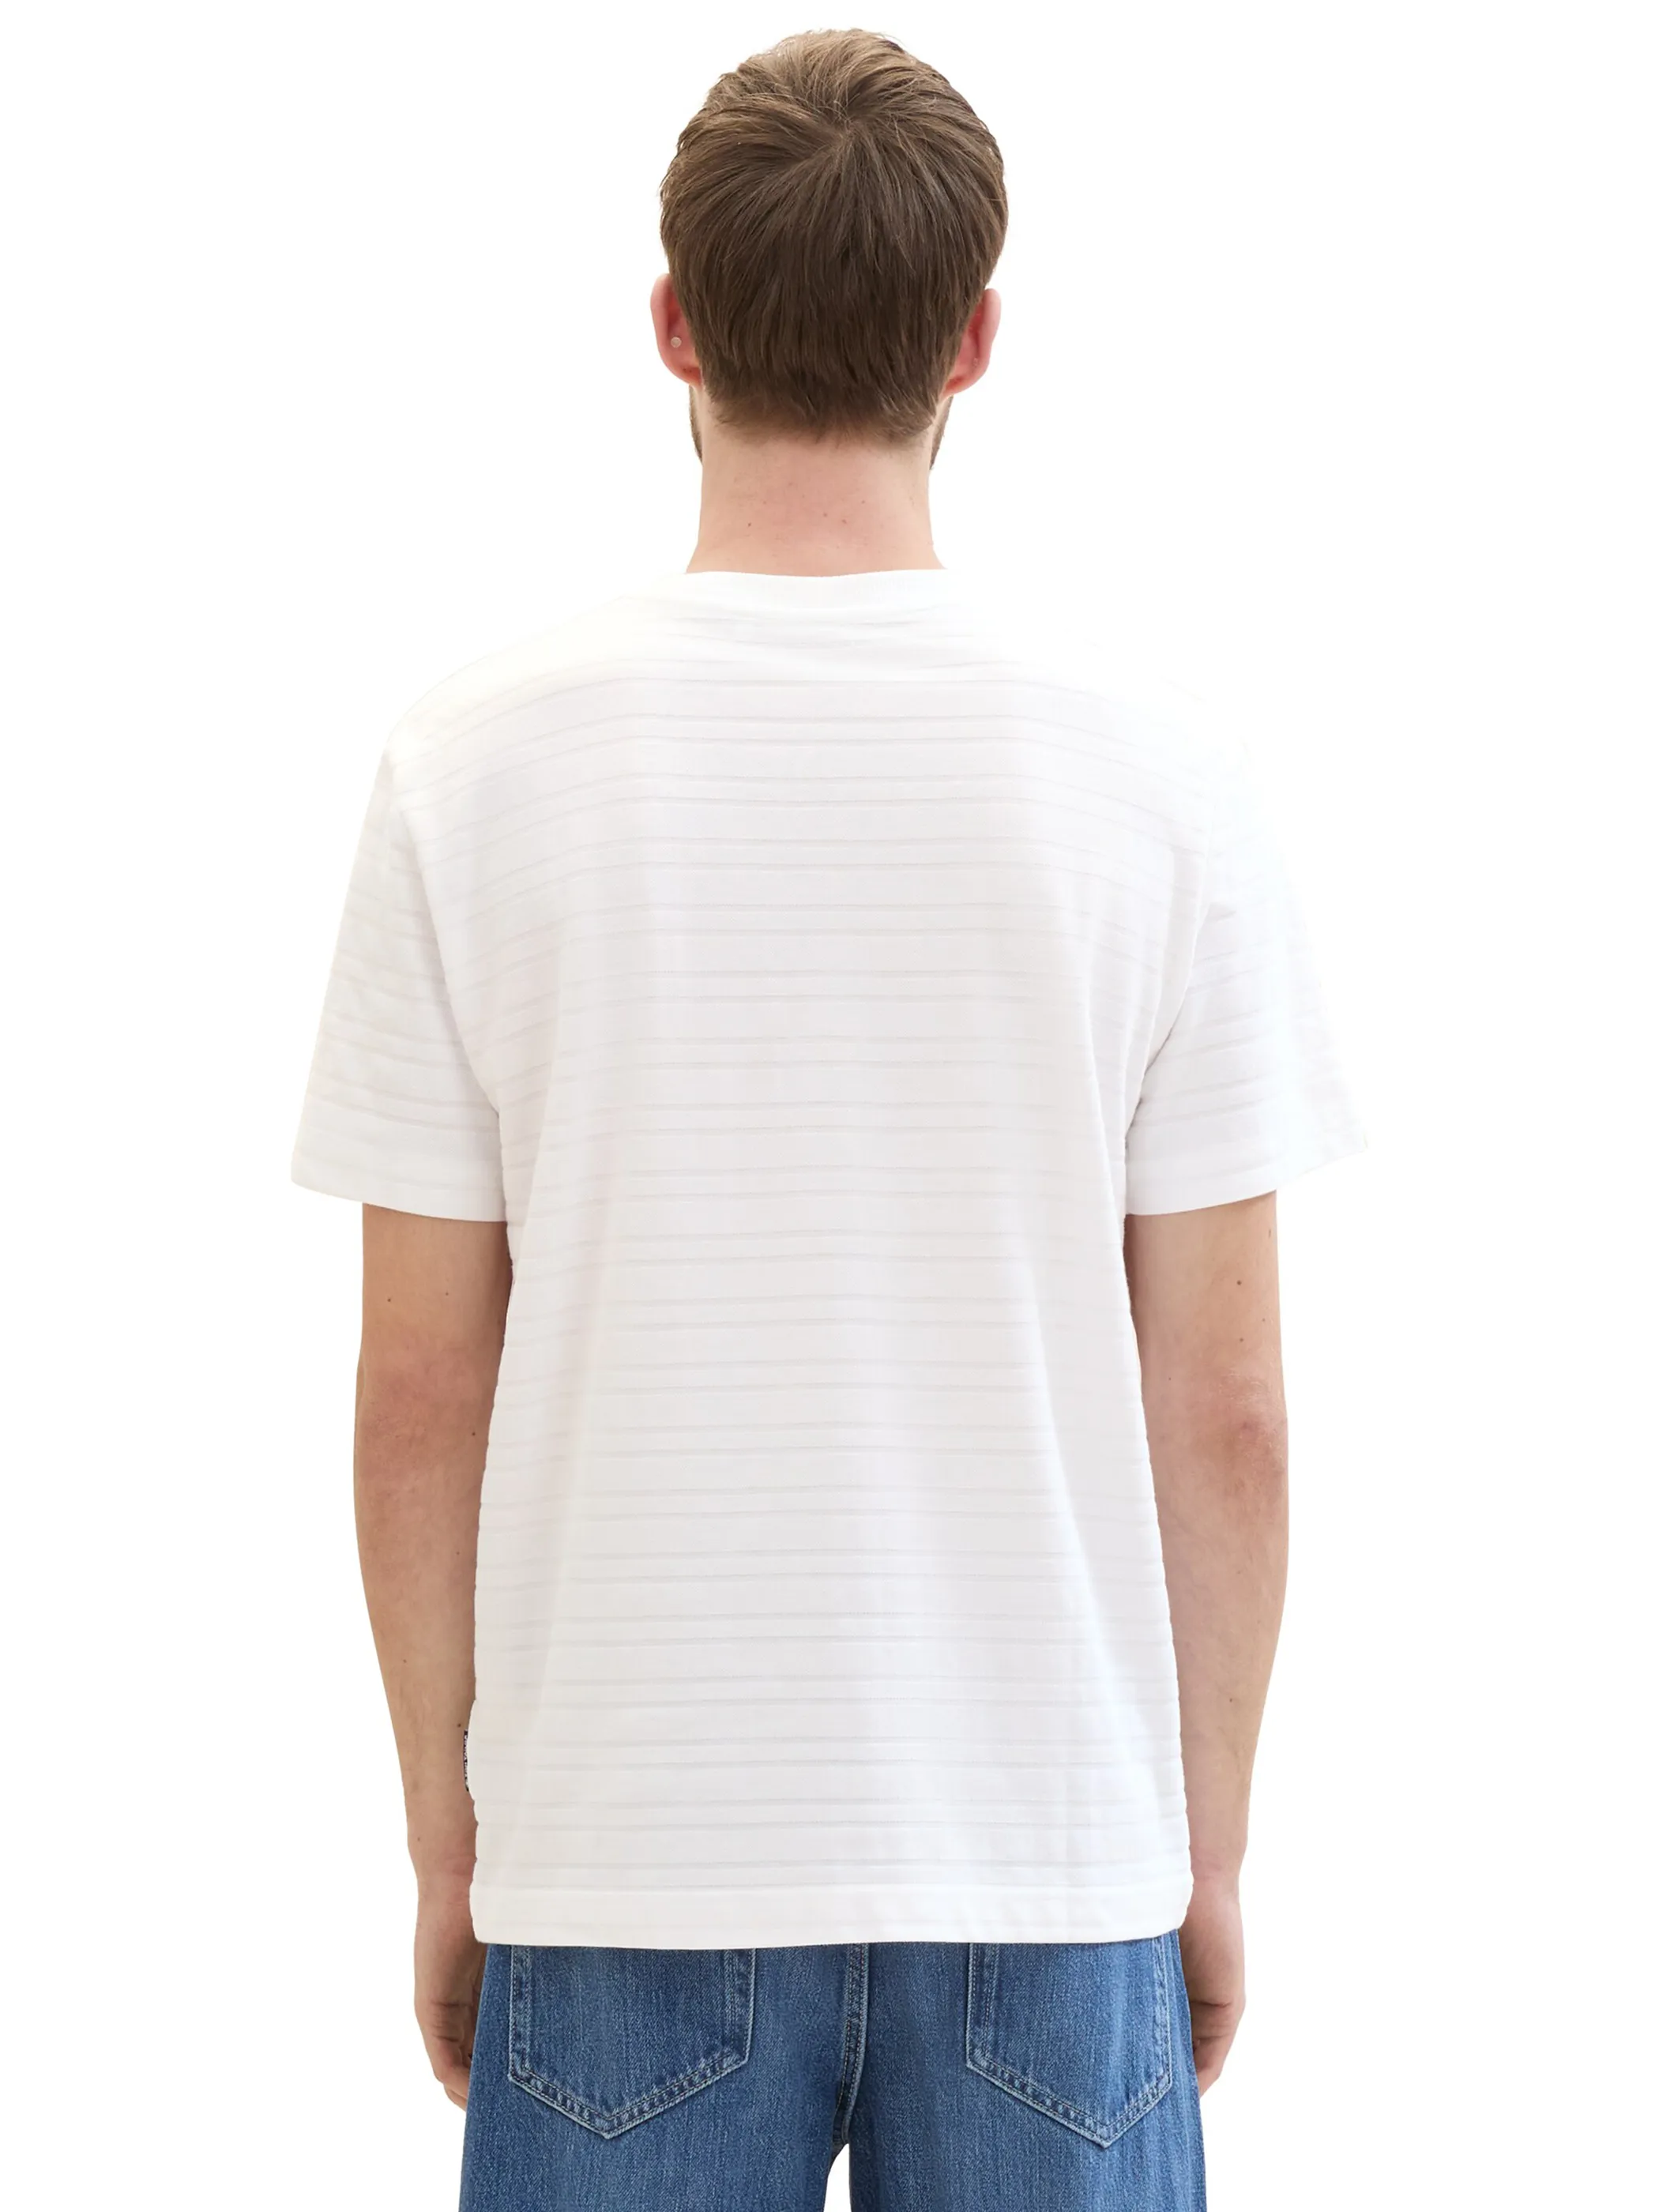 Tom Tailor 1042131 structured t-shirt Weiß 895628 20000 2